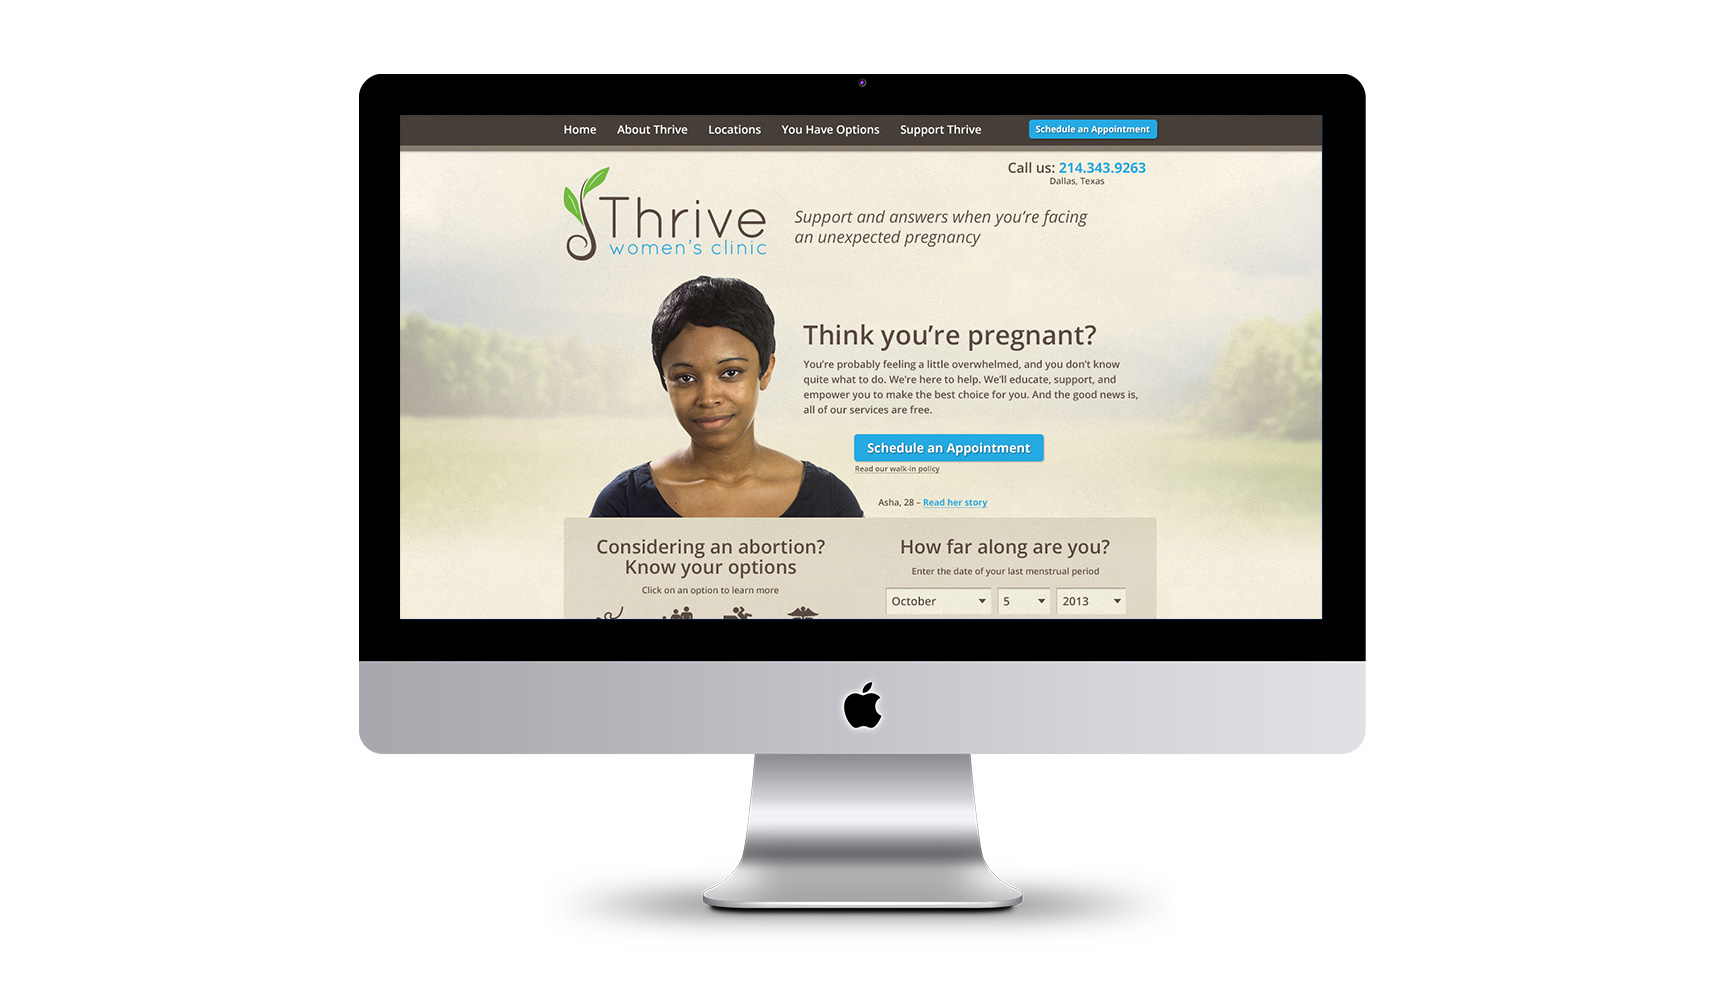 Thrive-website